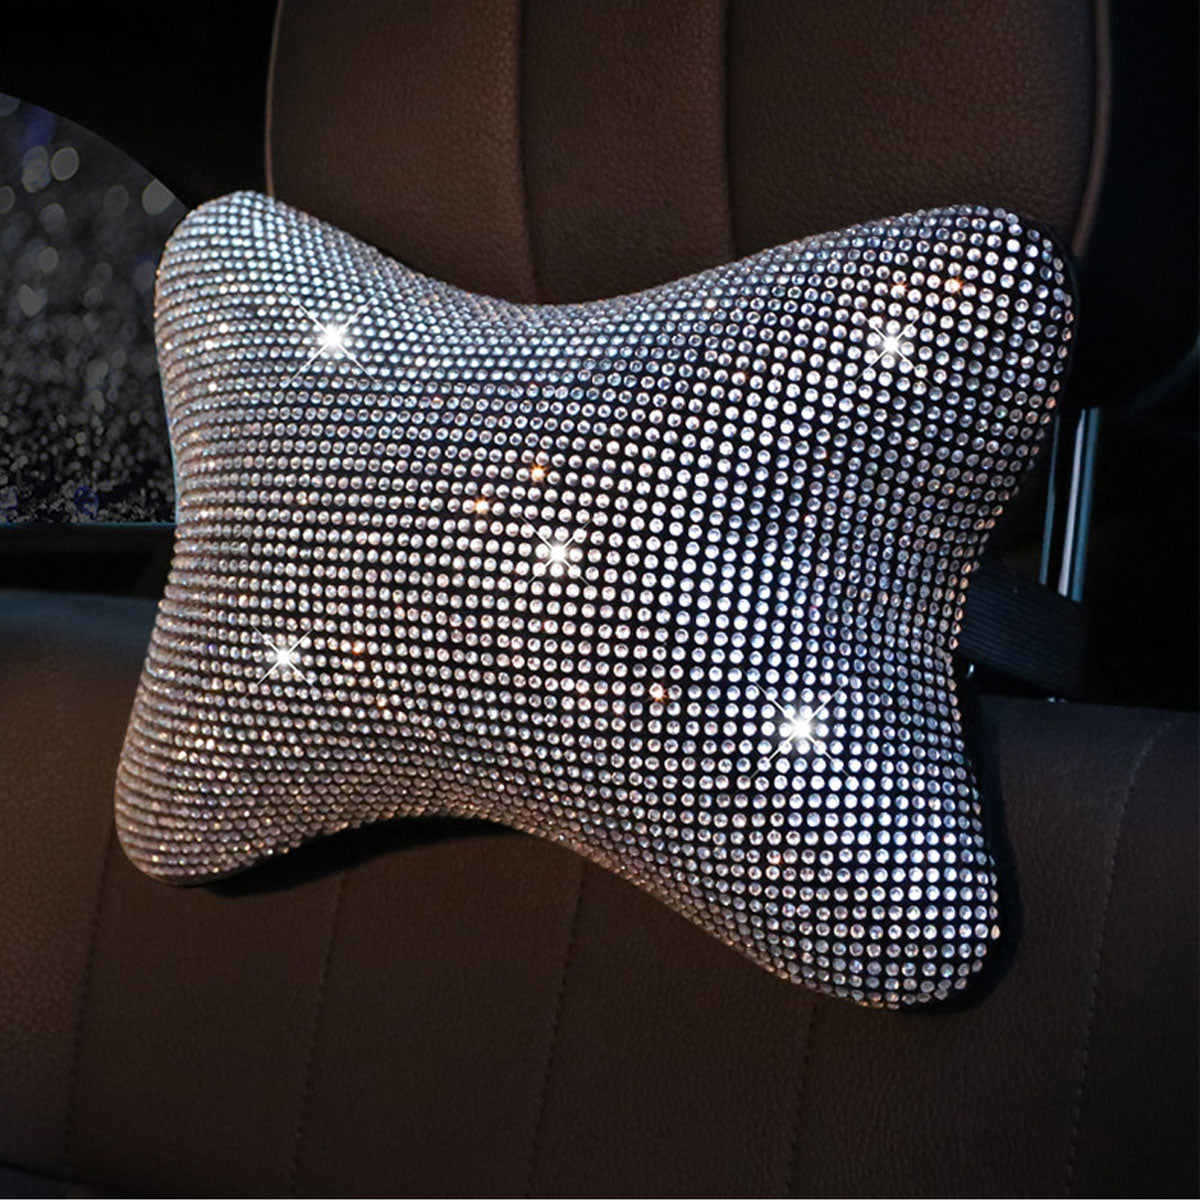 Universal Sparkle Luxury Sparkling Diamond Car Interior Accessories Decoration - Auto GoShop